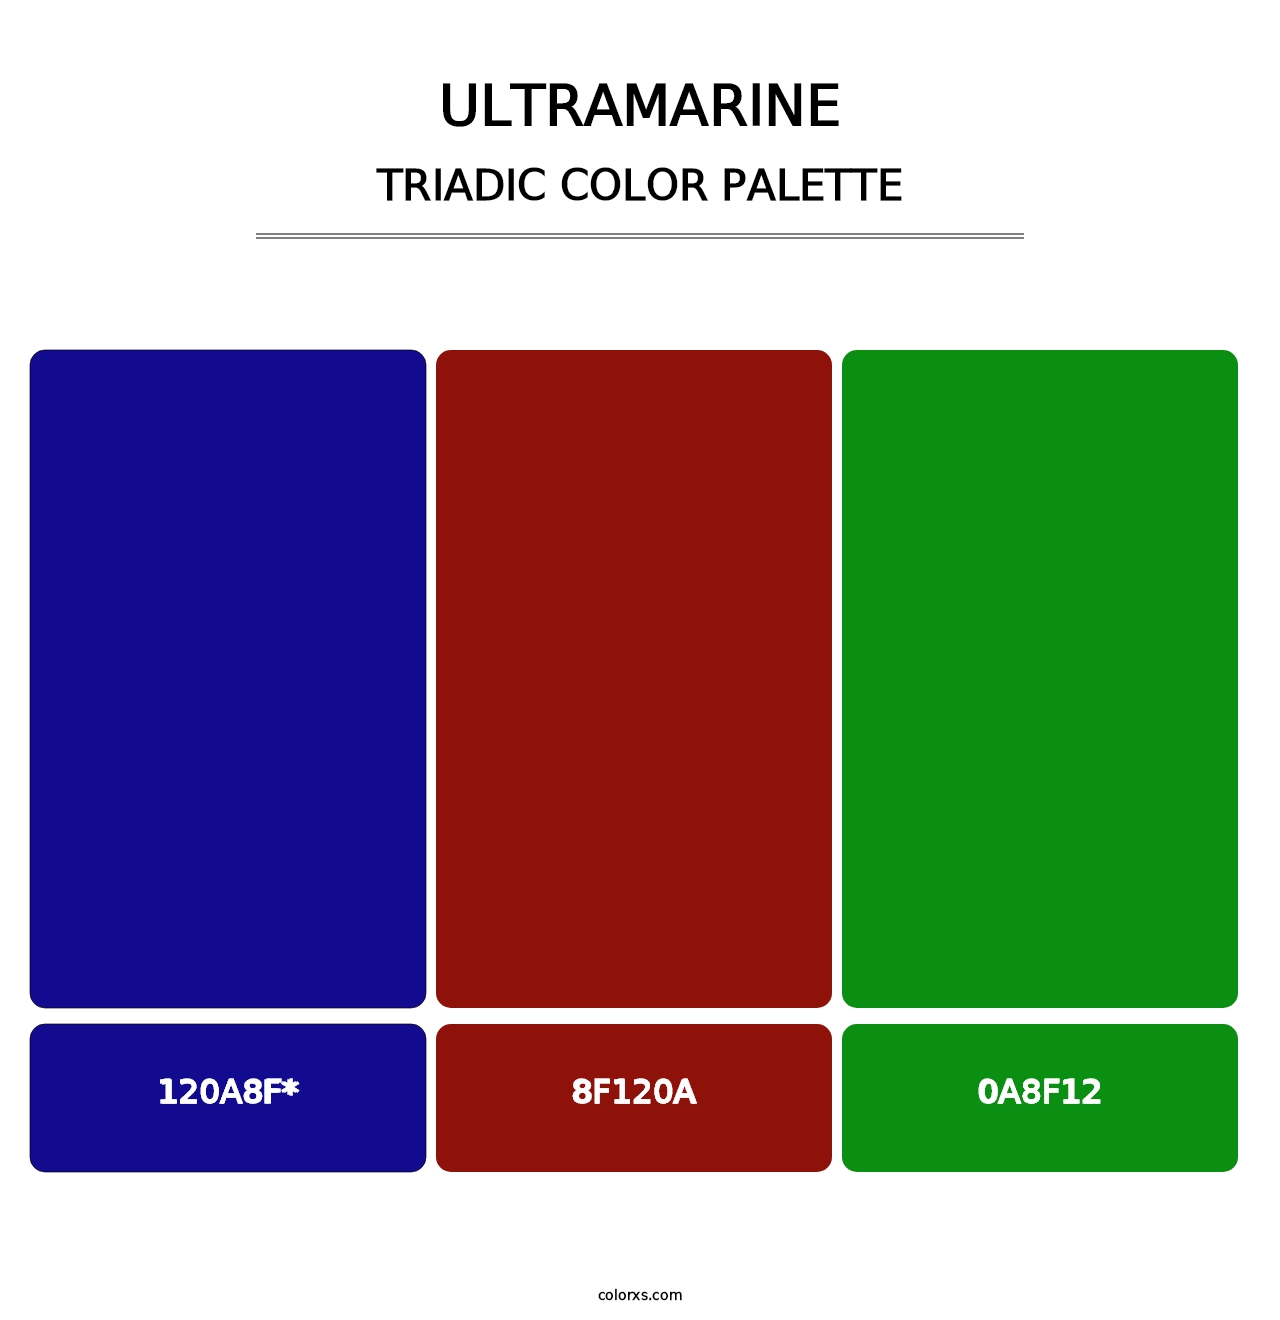 Ultramarine - Triadic Color Palette